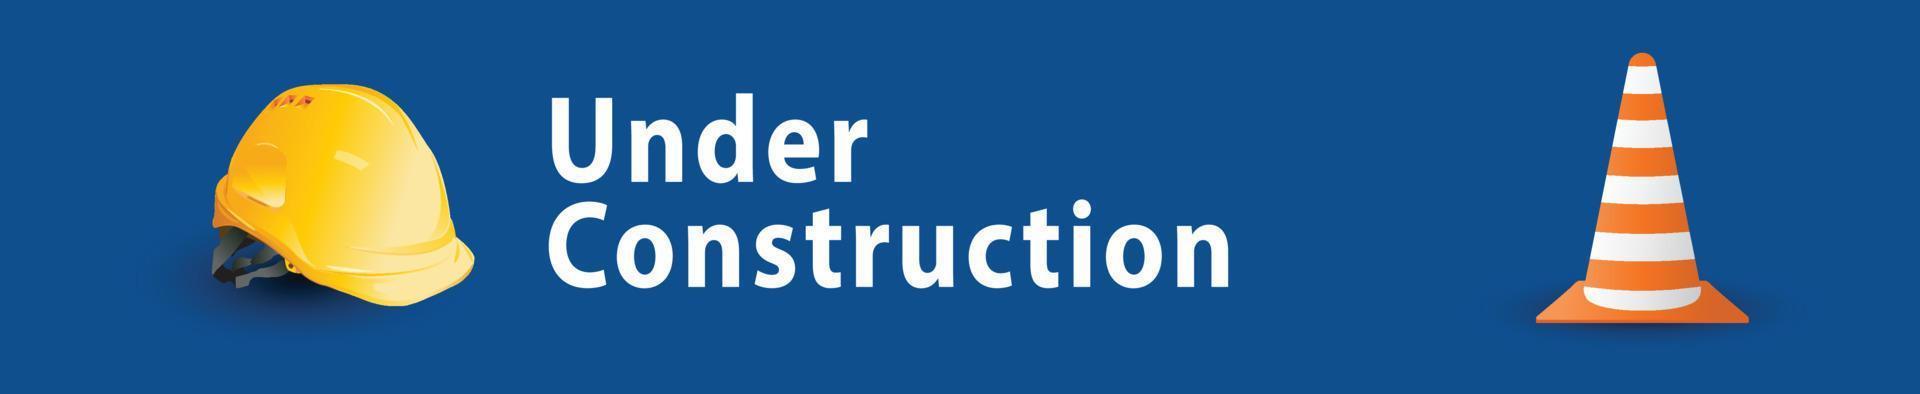 under construction, Helmet for builder worker and Traffic cones., Horizontal banner , vector illustration.